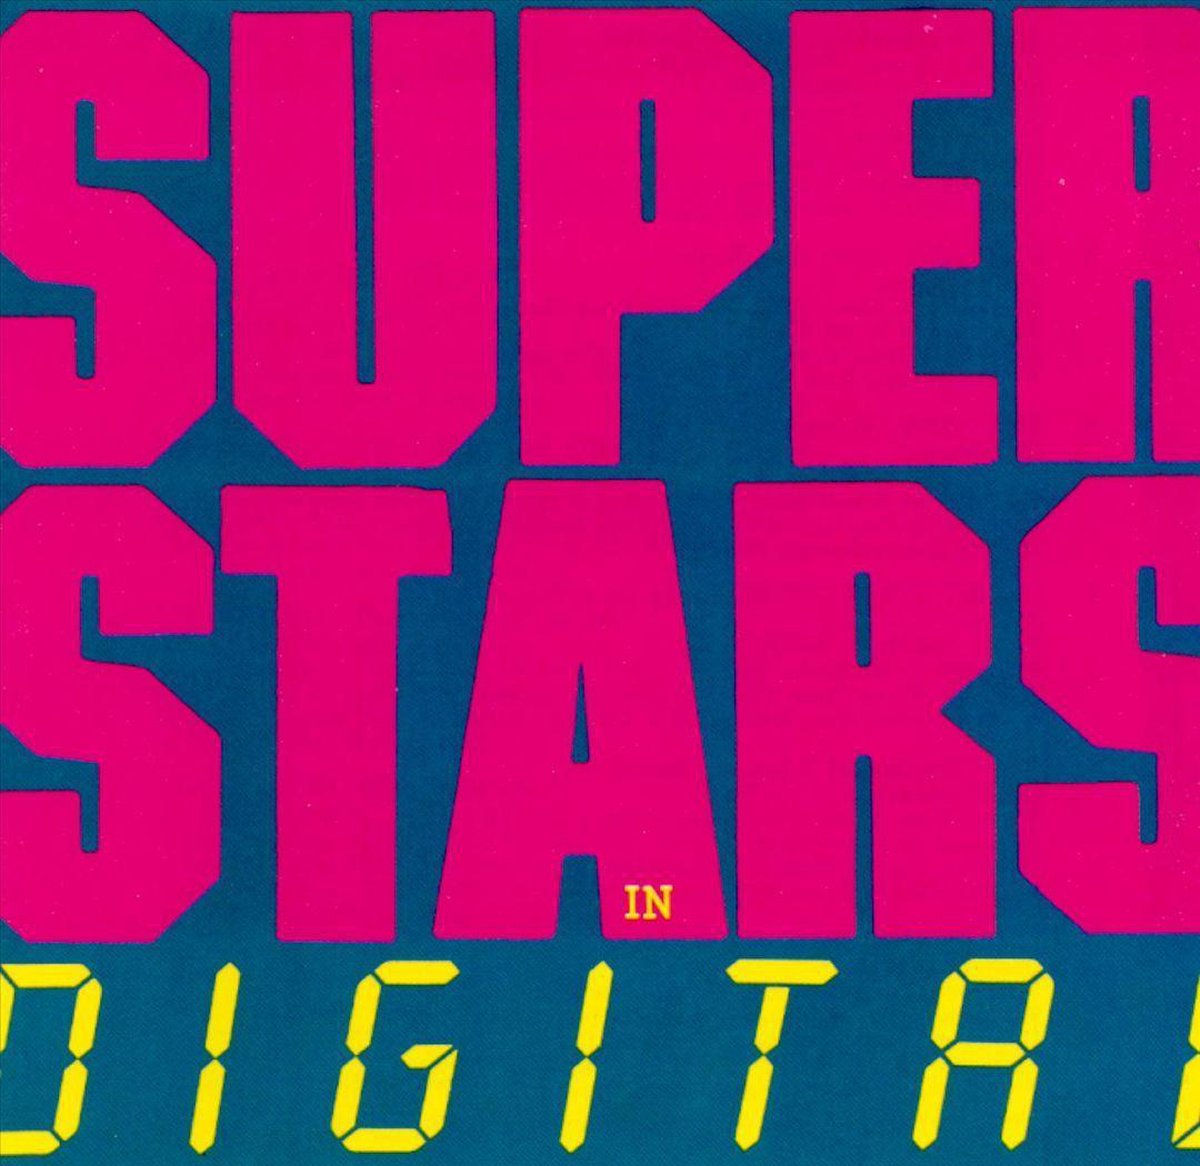 Superstars in Digital - various artists